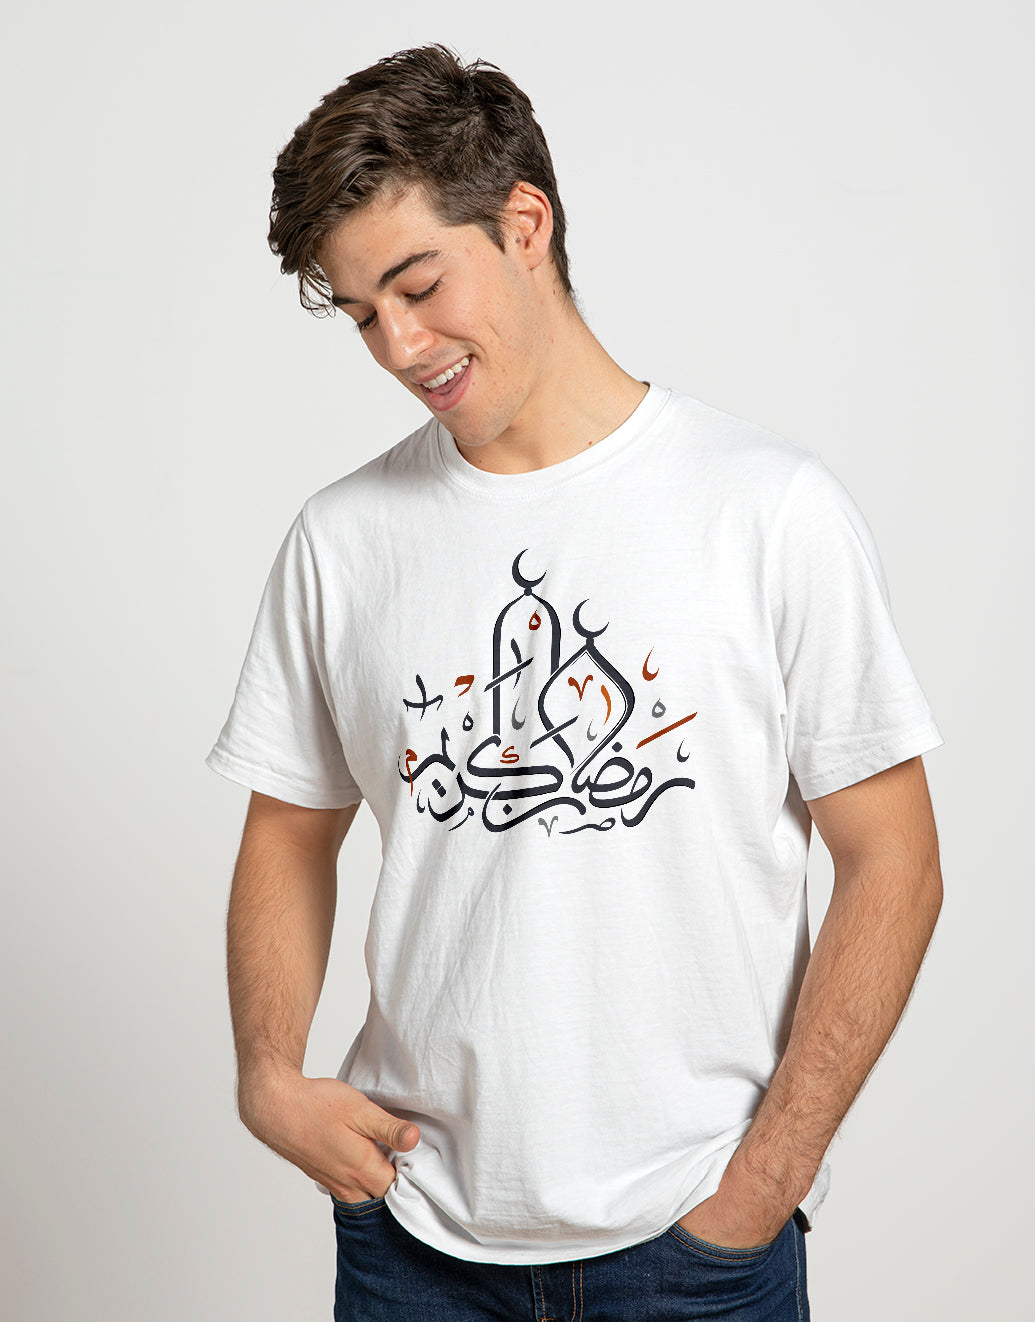 T-shirt for Men (Ramadan Kareem)